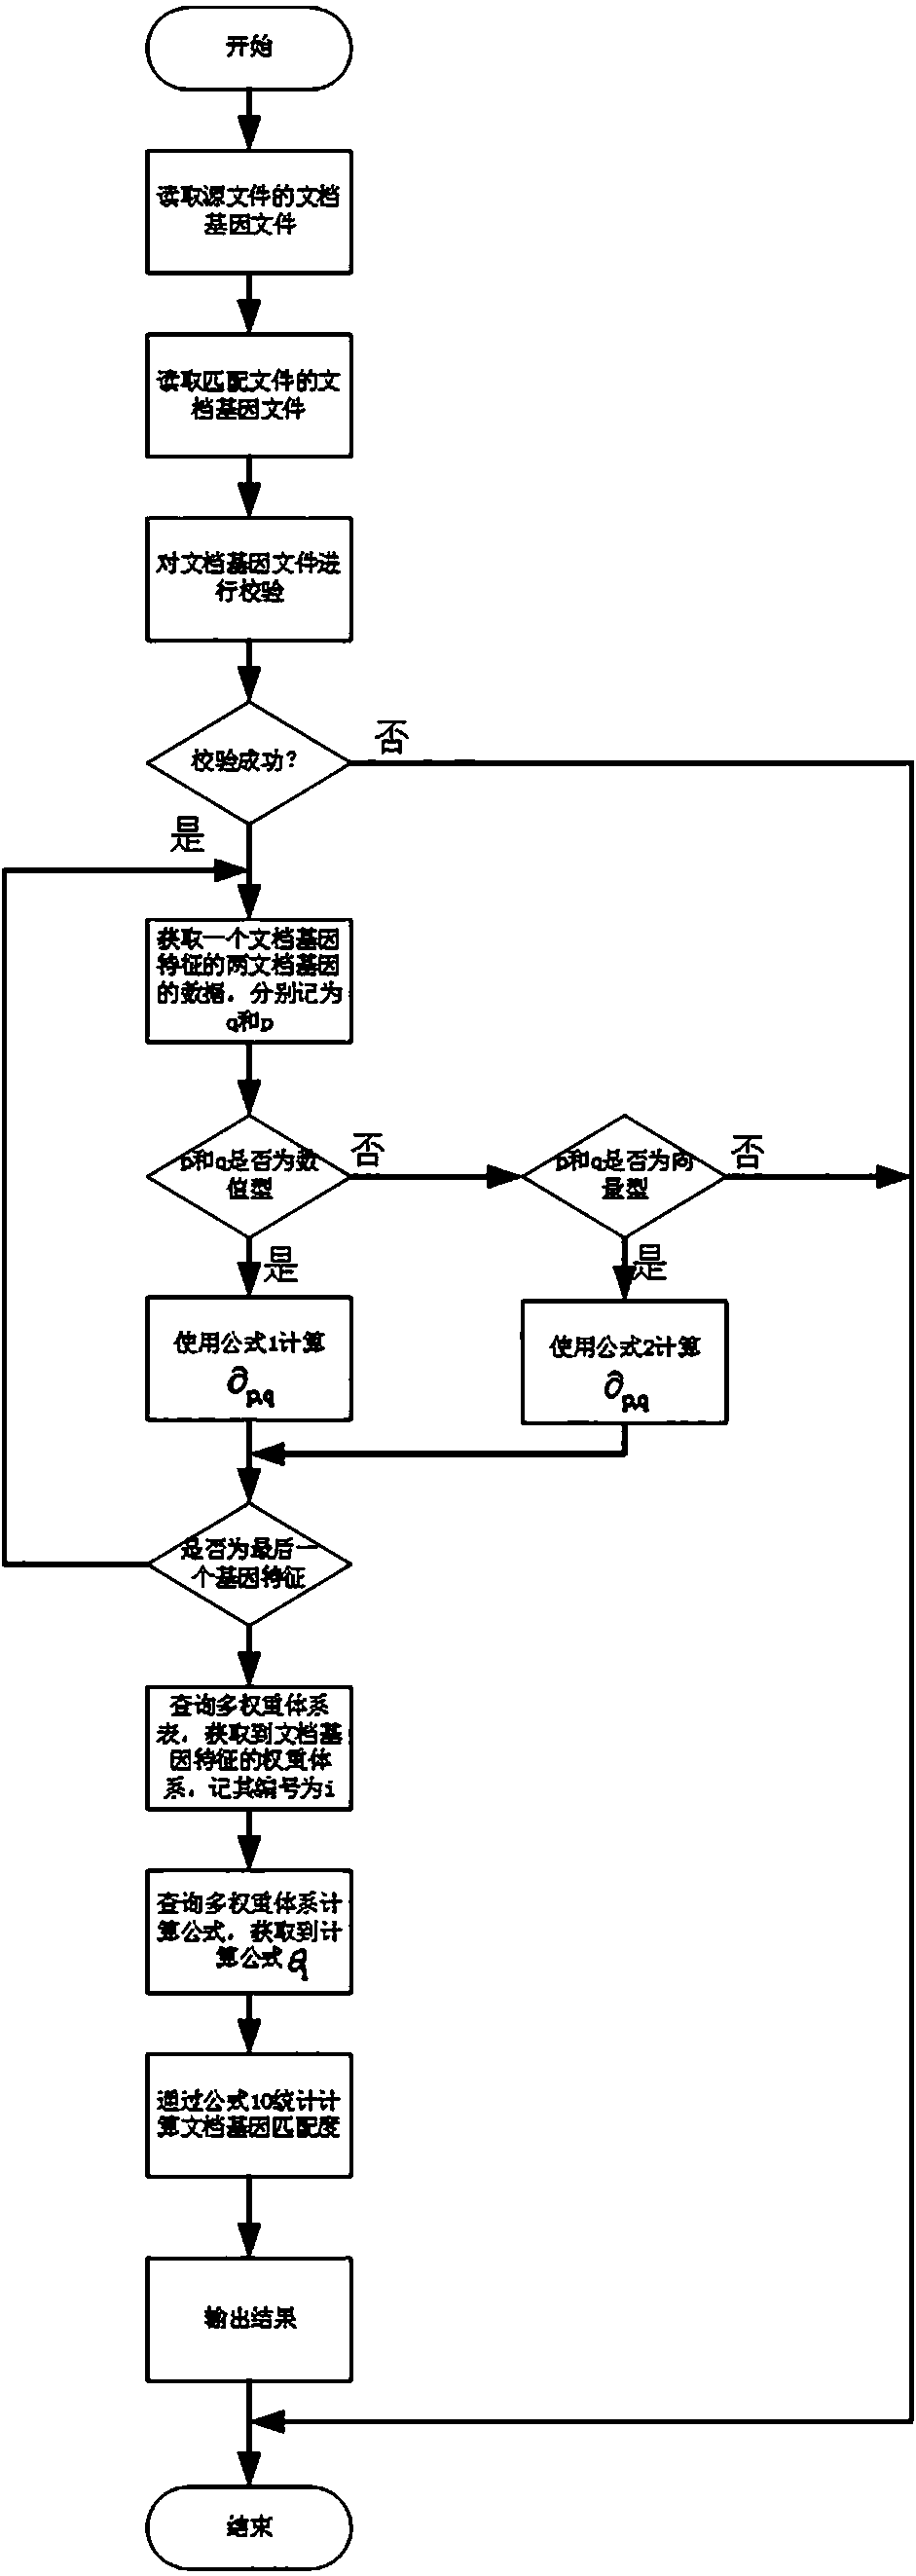 Chinese document gene matching method based on multi-weight system